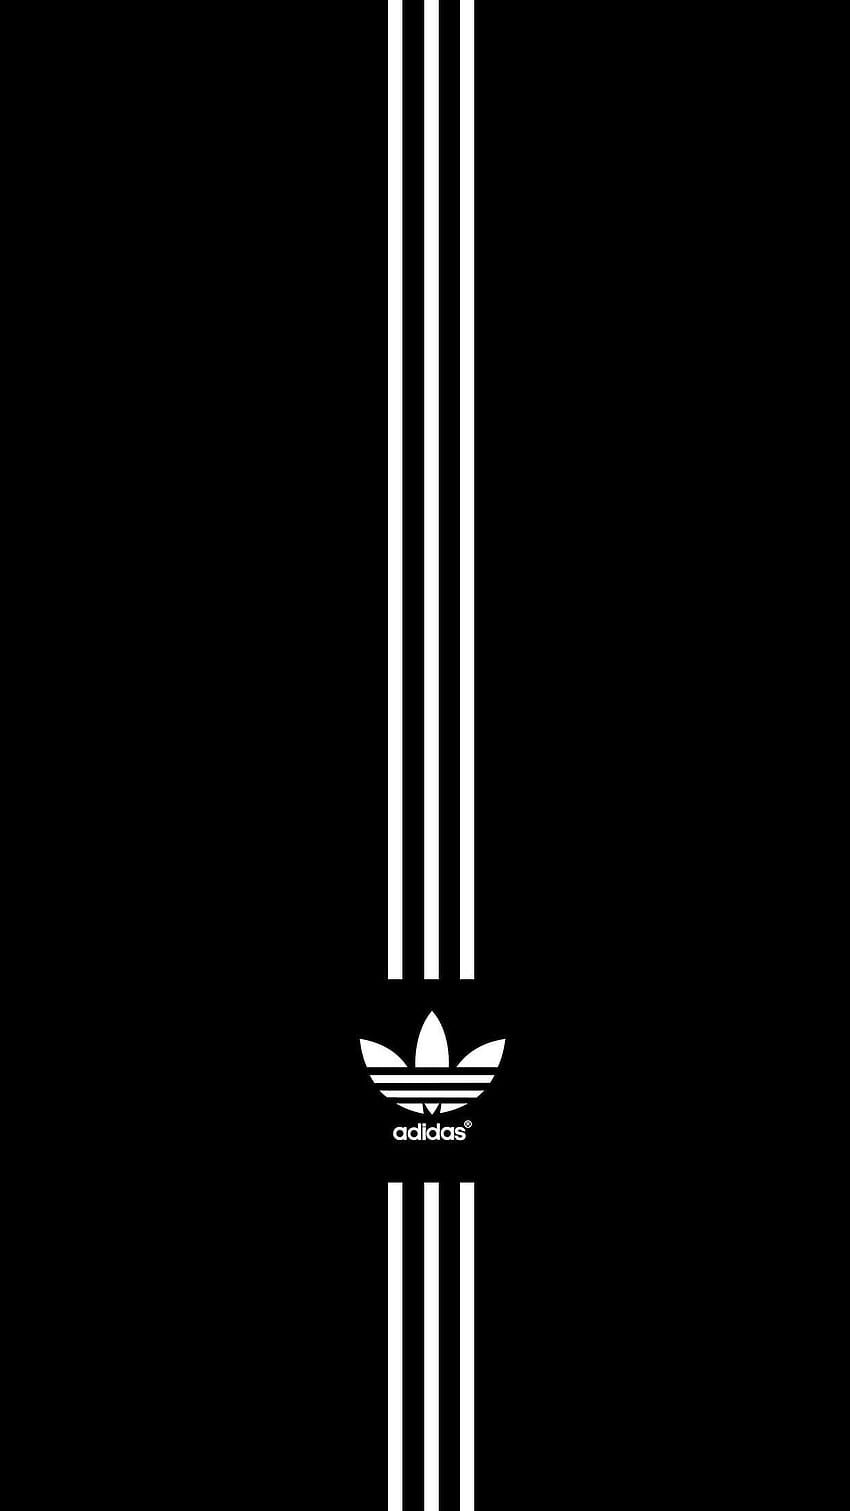 Adidas Logo Original for iPhone is a fantastic HD phone wallpaper